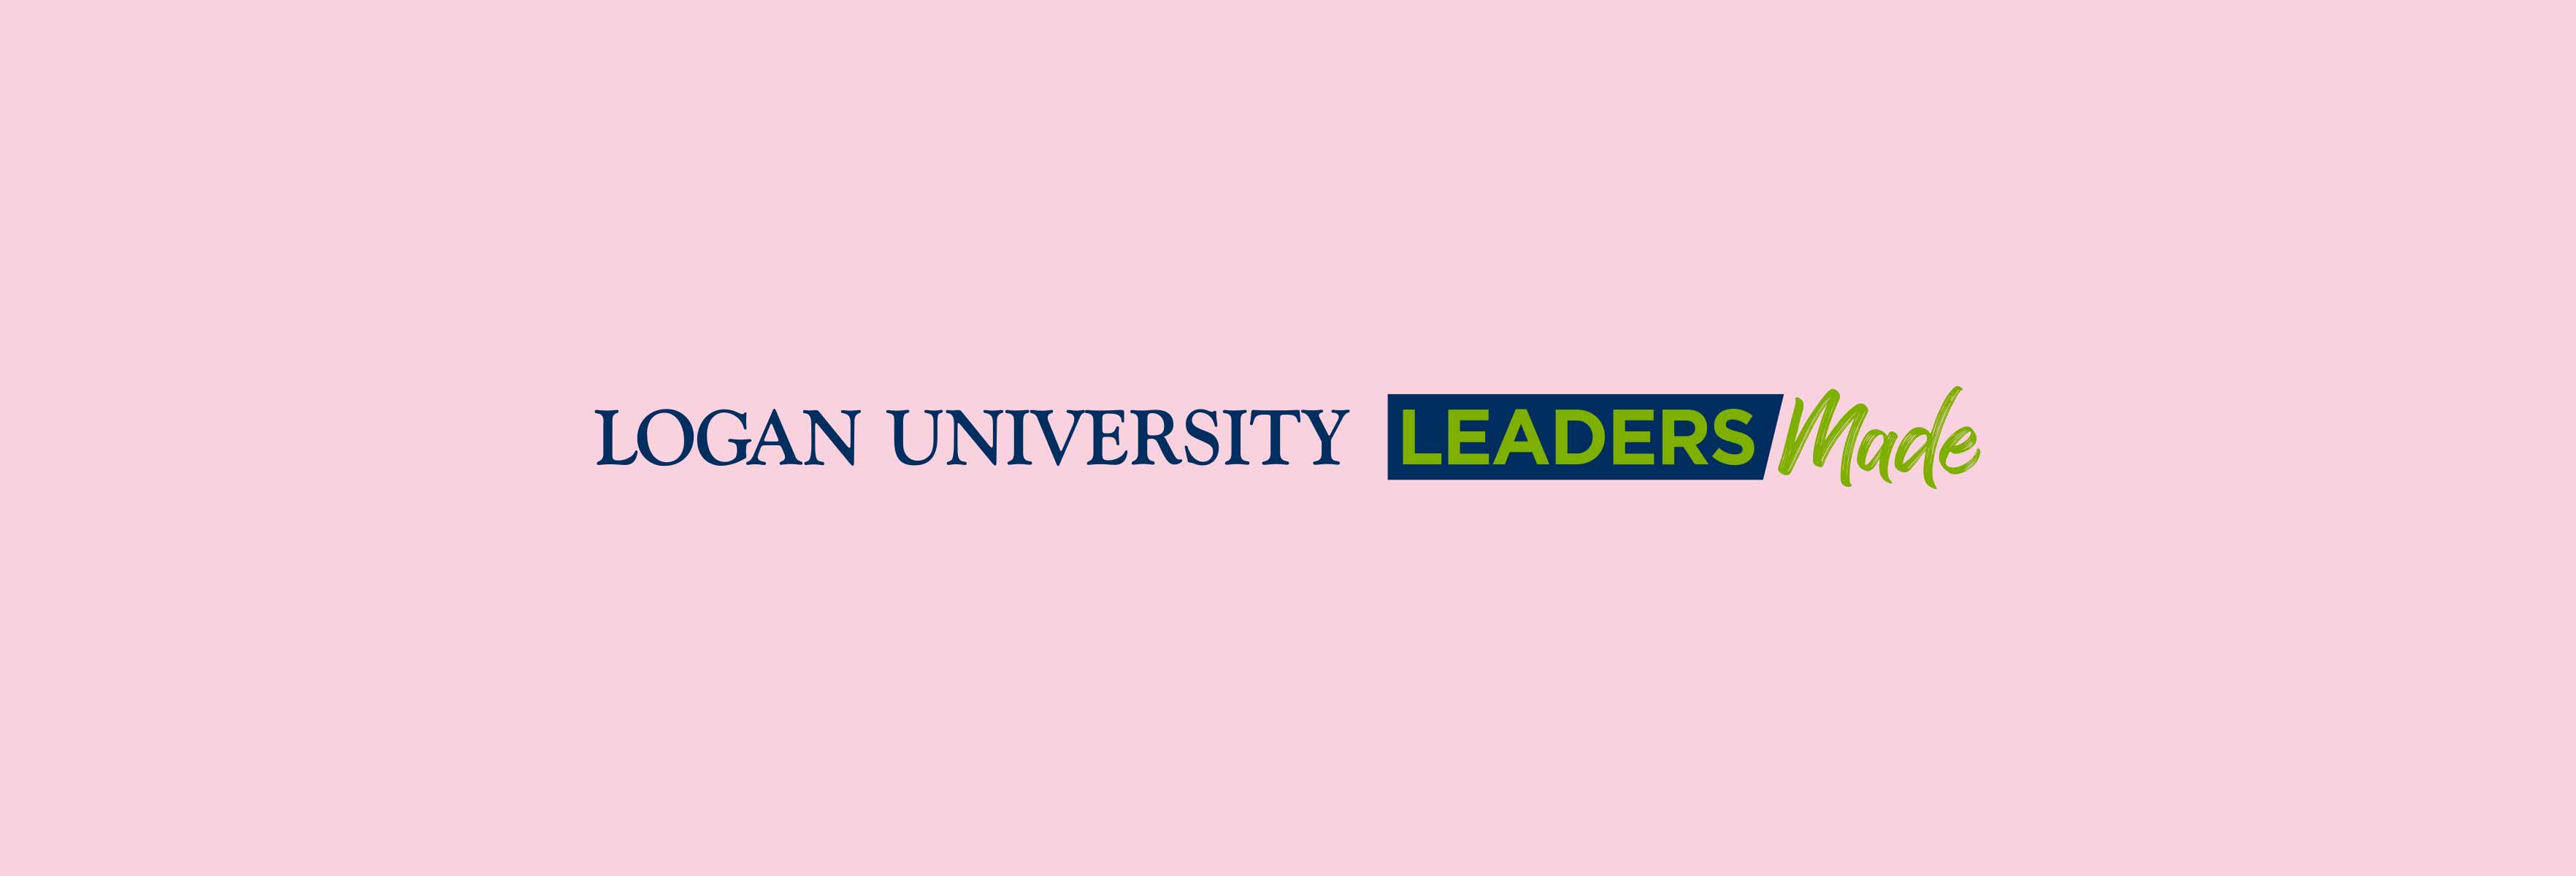 logan university leaders made logo